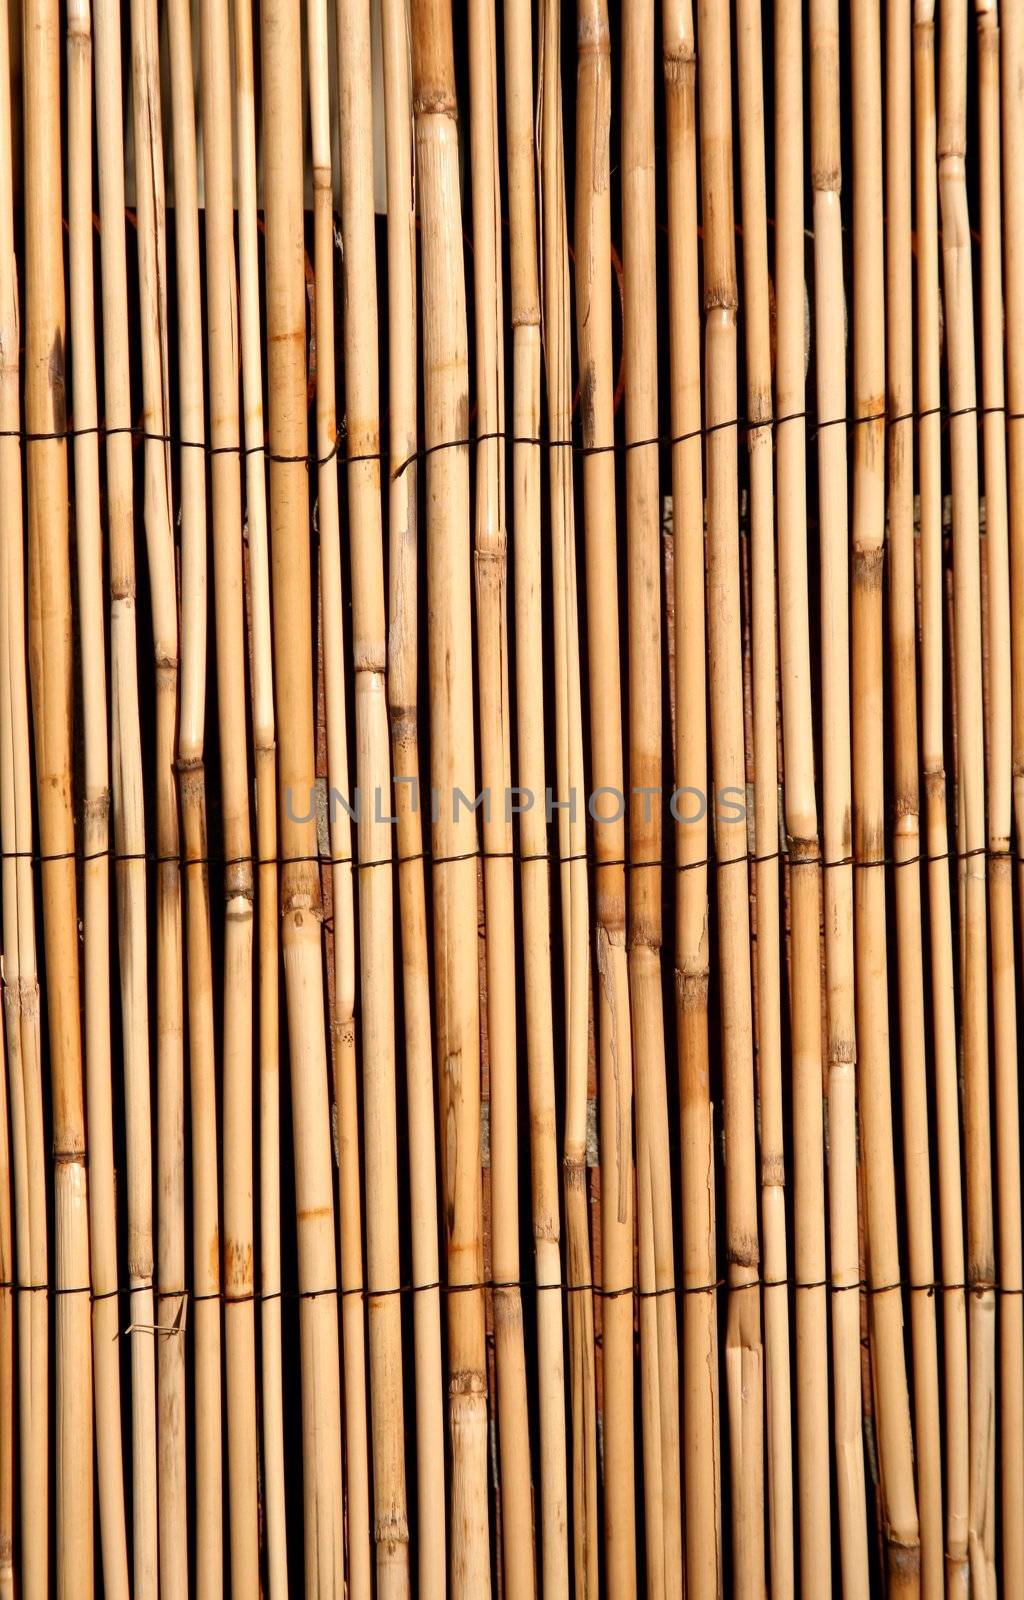 Deep golden rush or bamboo texture, digital image